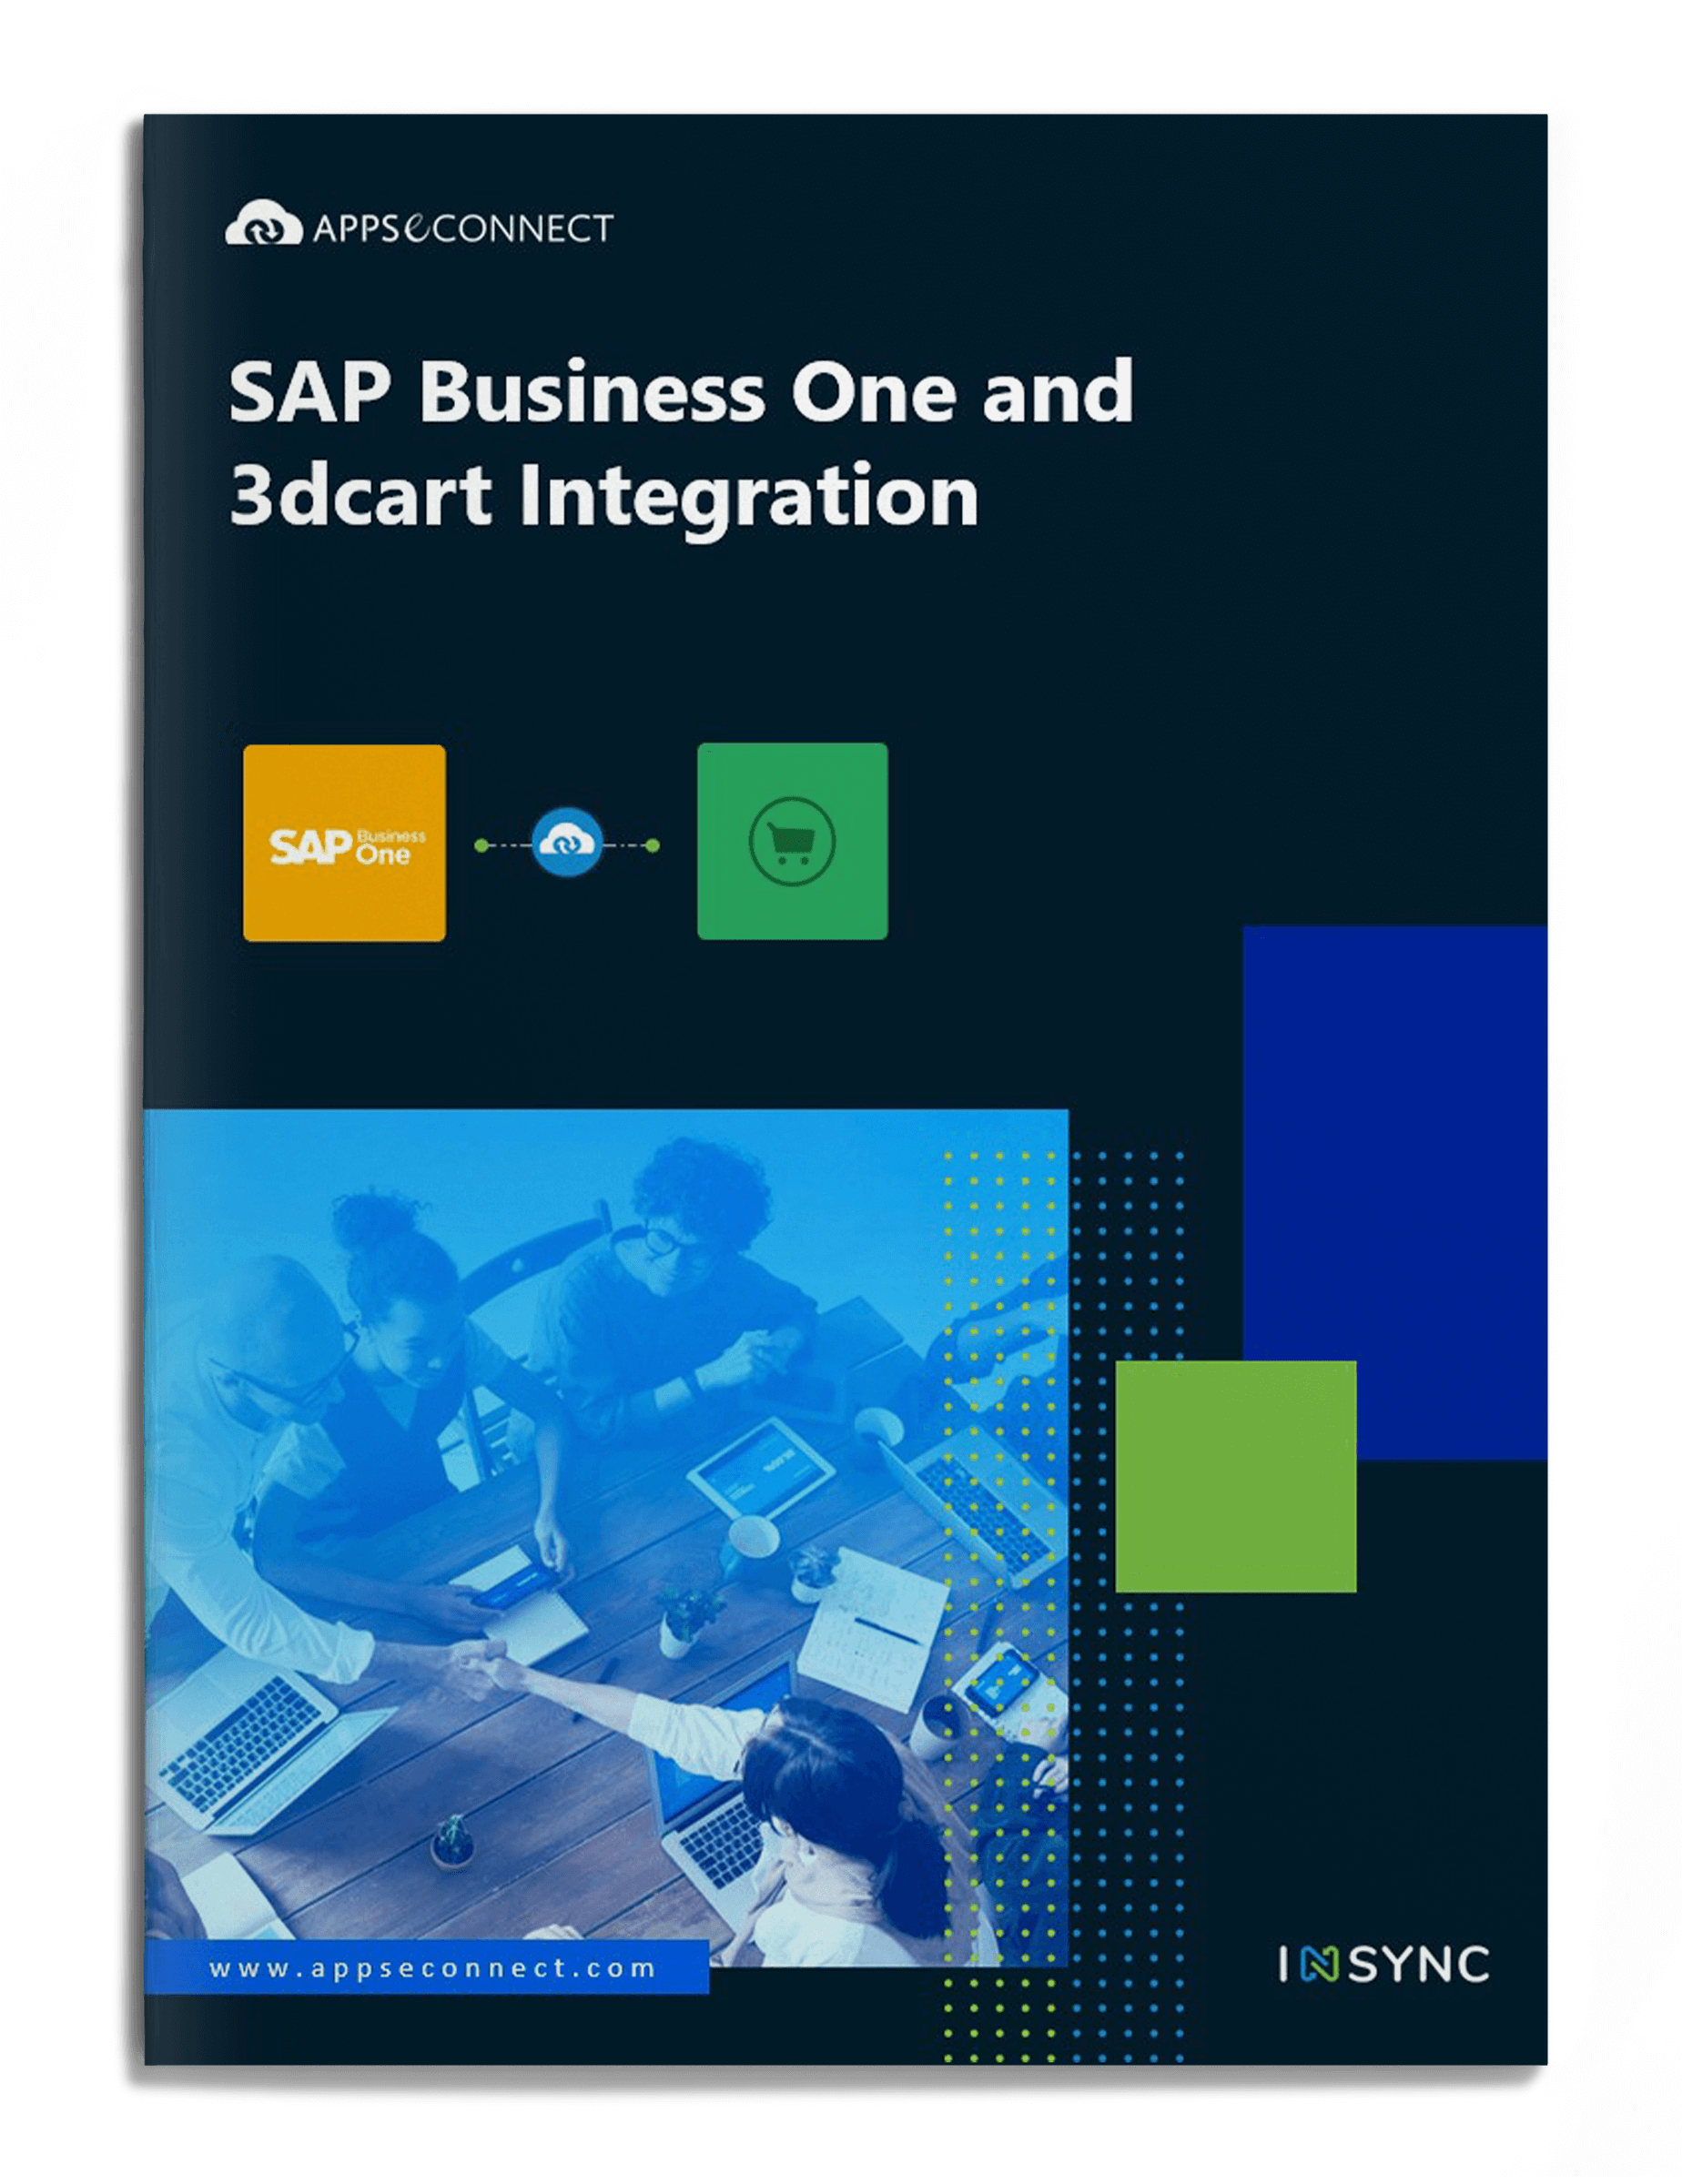 sap-business-one-3dcart-integration-brochure-cover